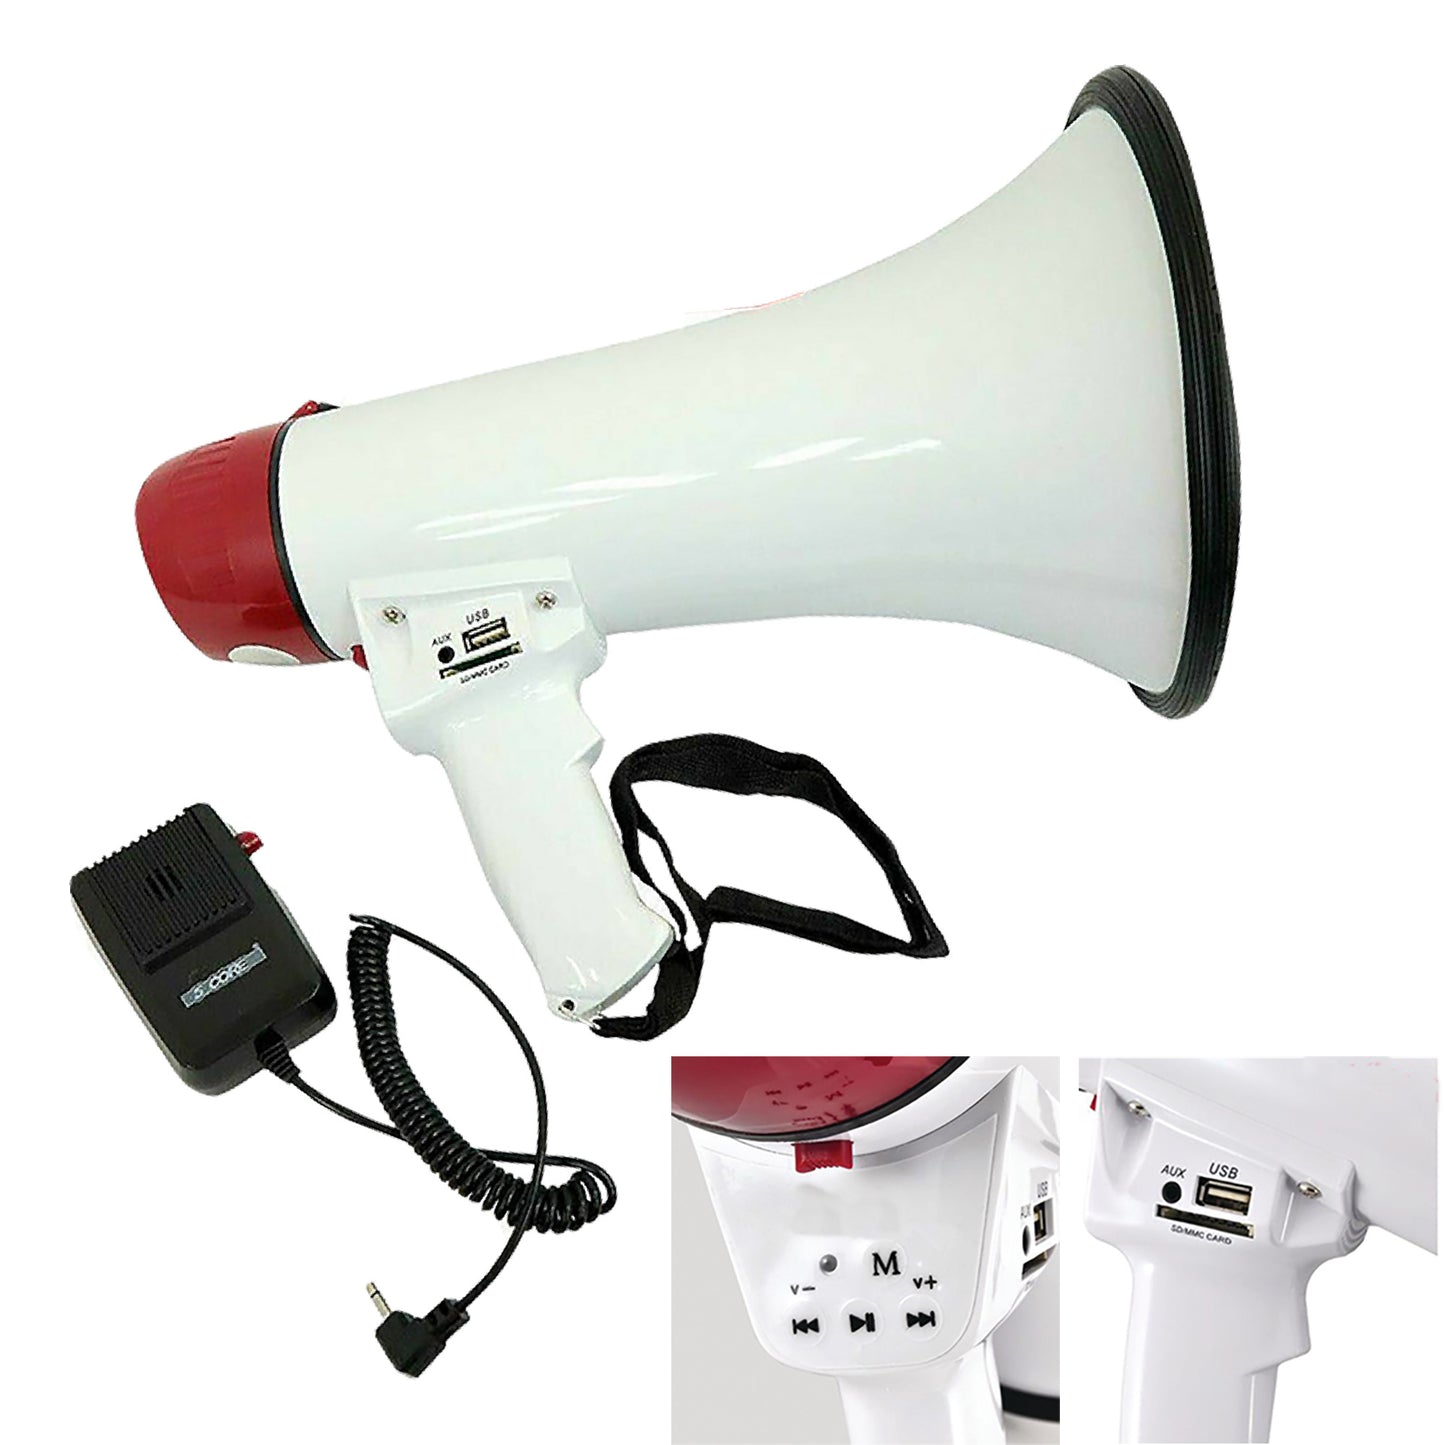 5 CORE 40W Megaphone Bullhorn Cheer Bull Horn Speaker Rechargeable Megafono 1000 Yard Range Siren Recording USB SD Card AUX Detachable Microphone for Cheerleading, Football, Safety Drills 20RF